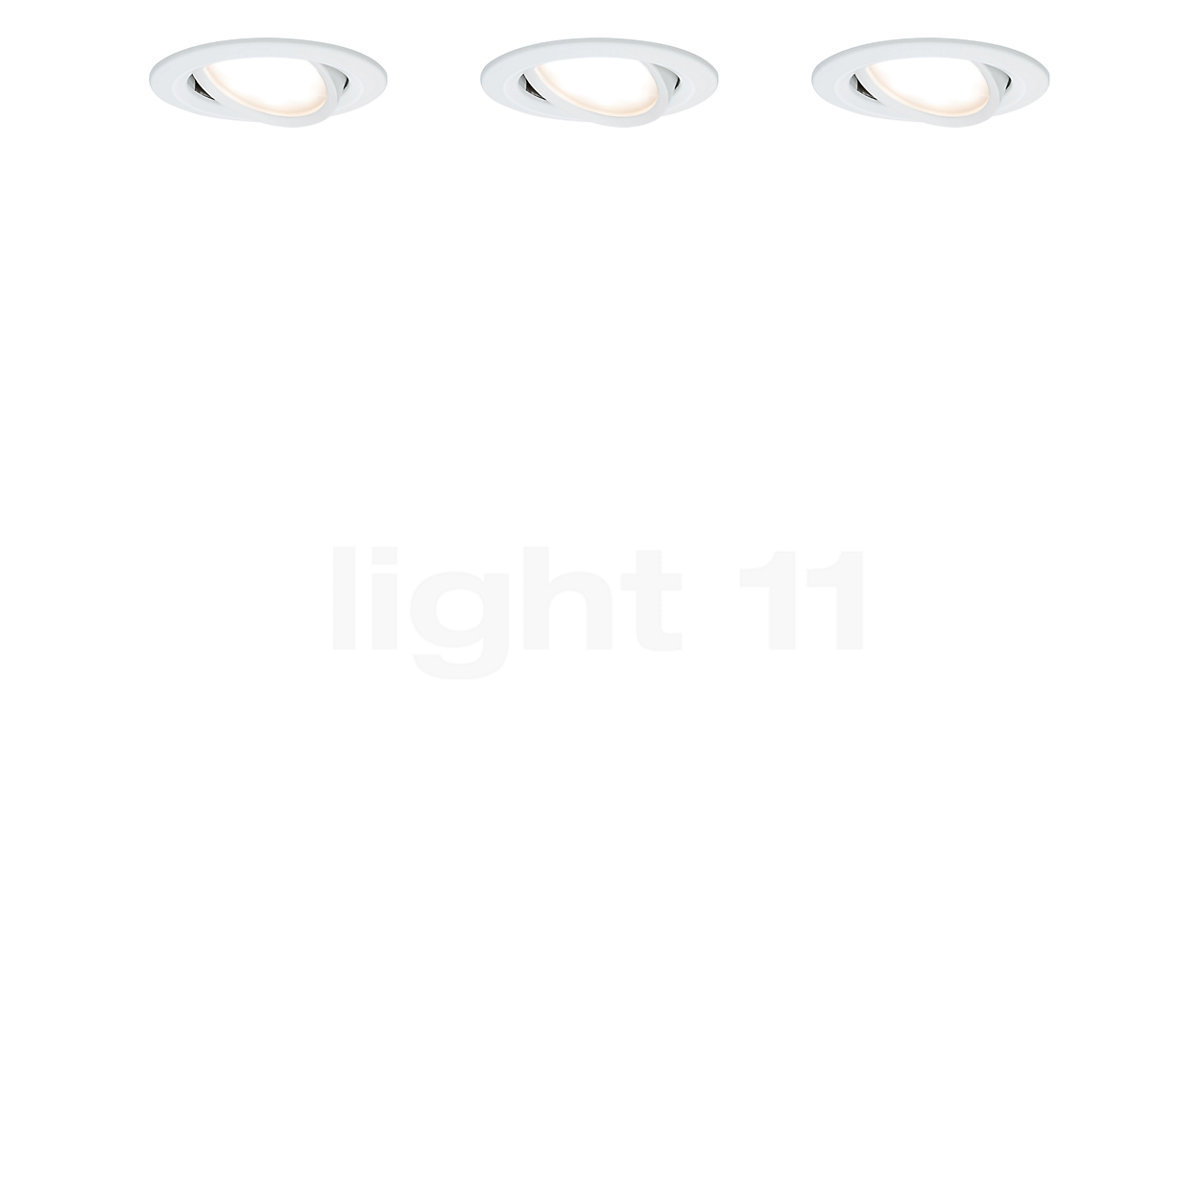 Buy Nova Plus Ceiling Light LED at